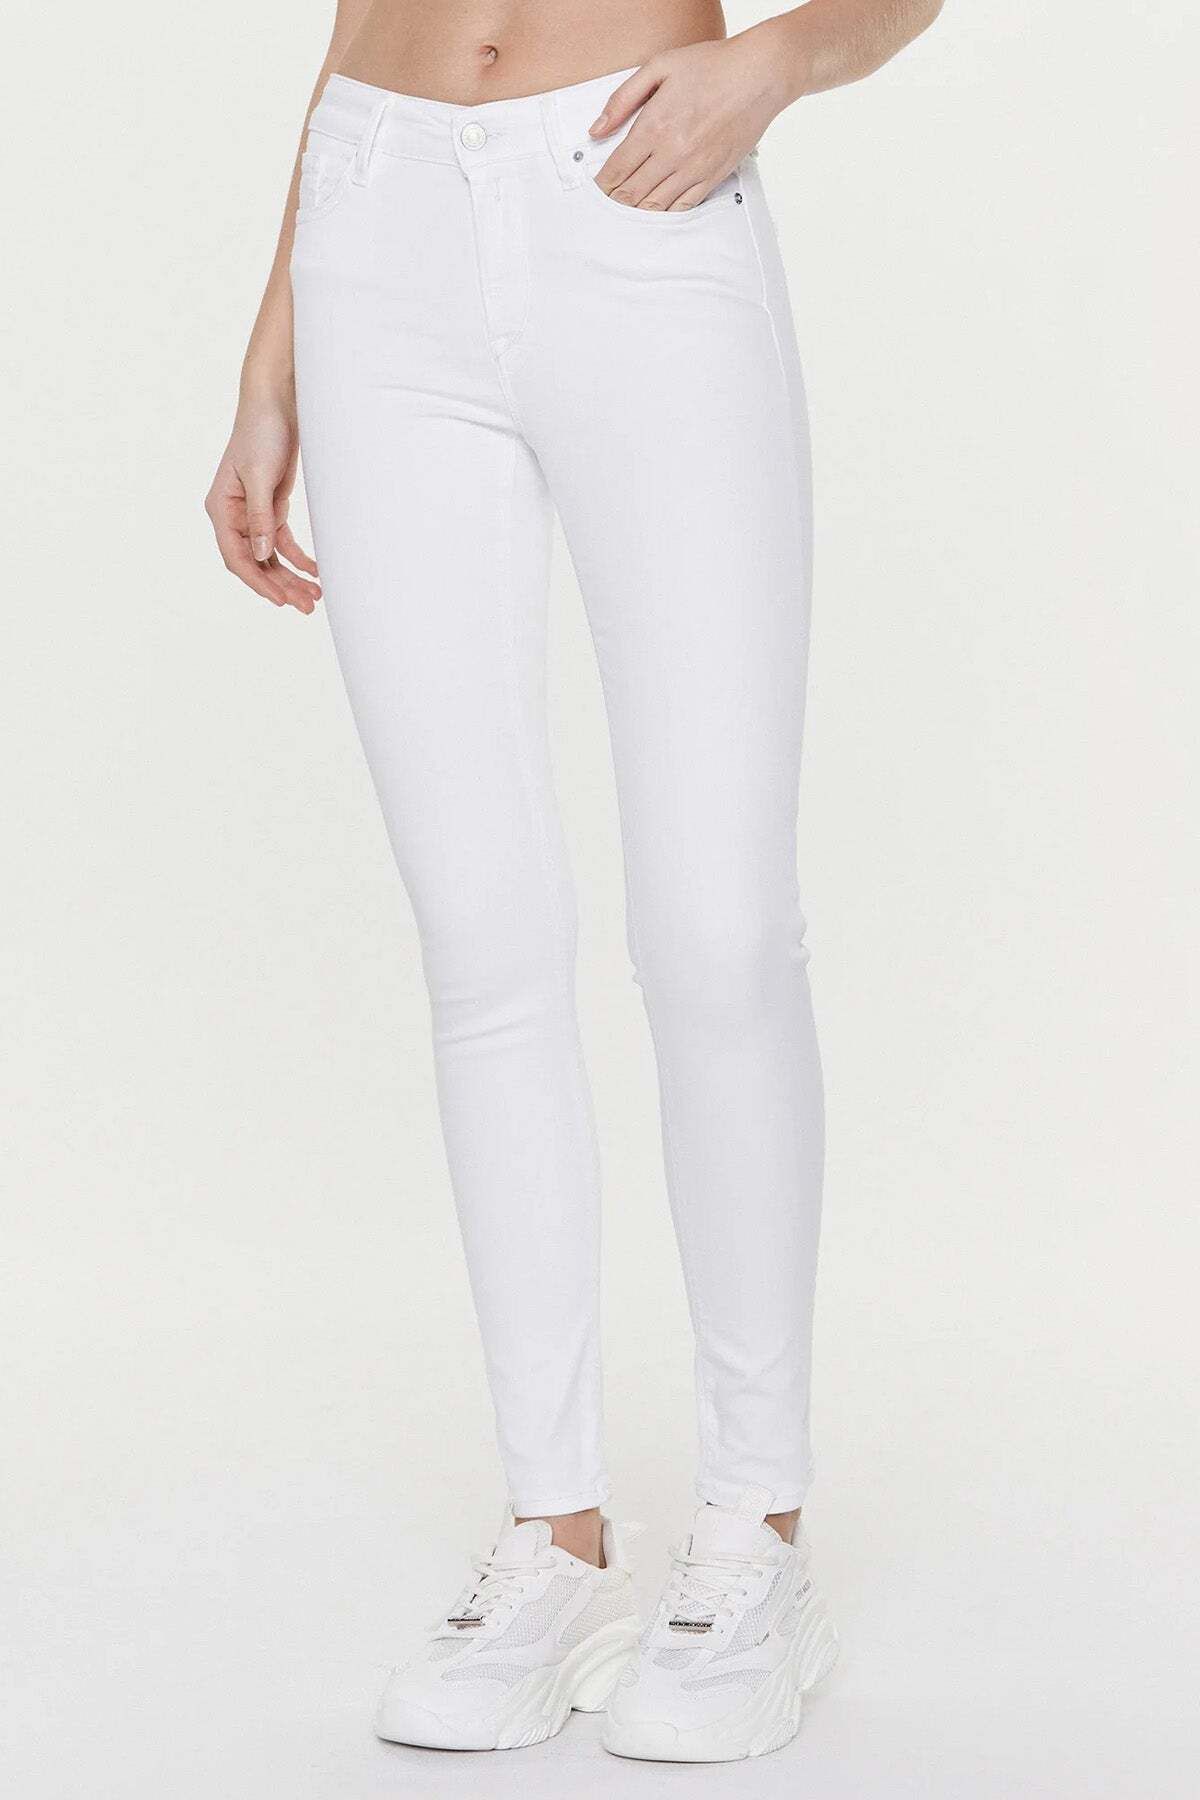 Replay Hyperflex X-lite Luzien Skinny Fit Jeans 25 / Beyaz